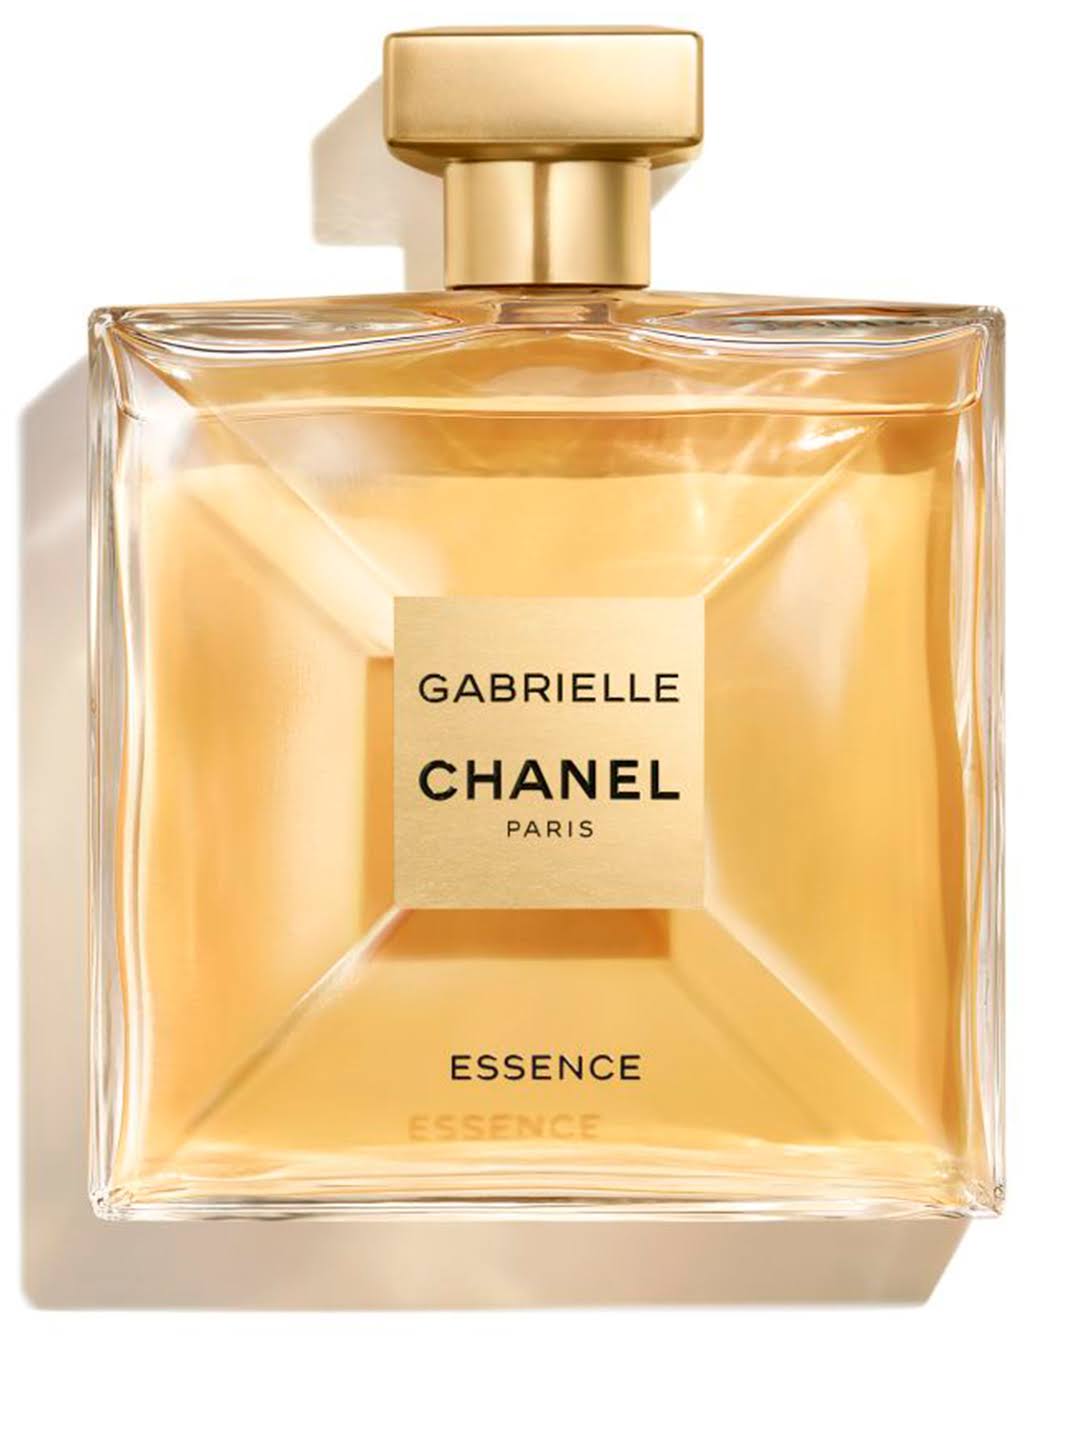 CHANEL Gabrielle Essence Eau De Parfum Spray - 50 ml